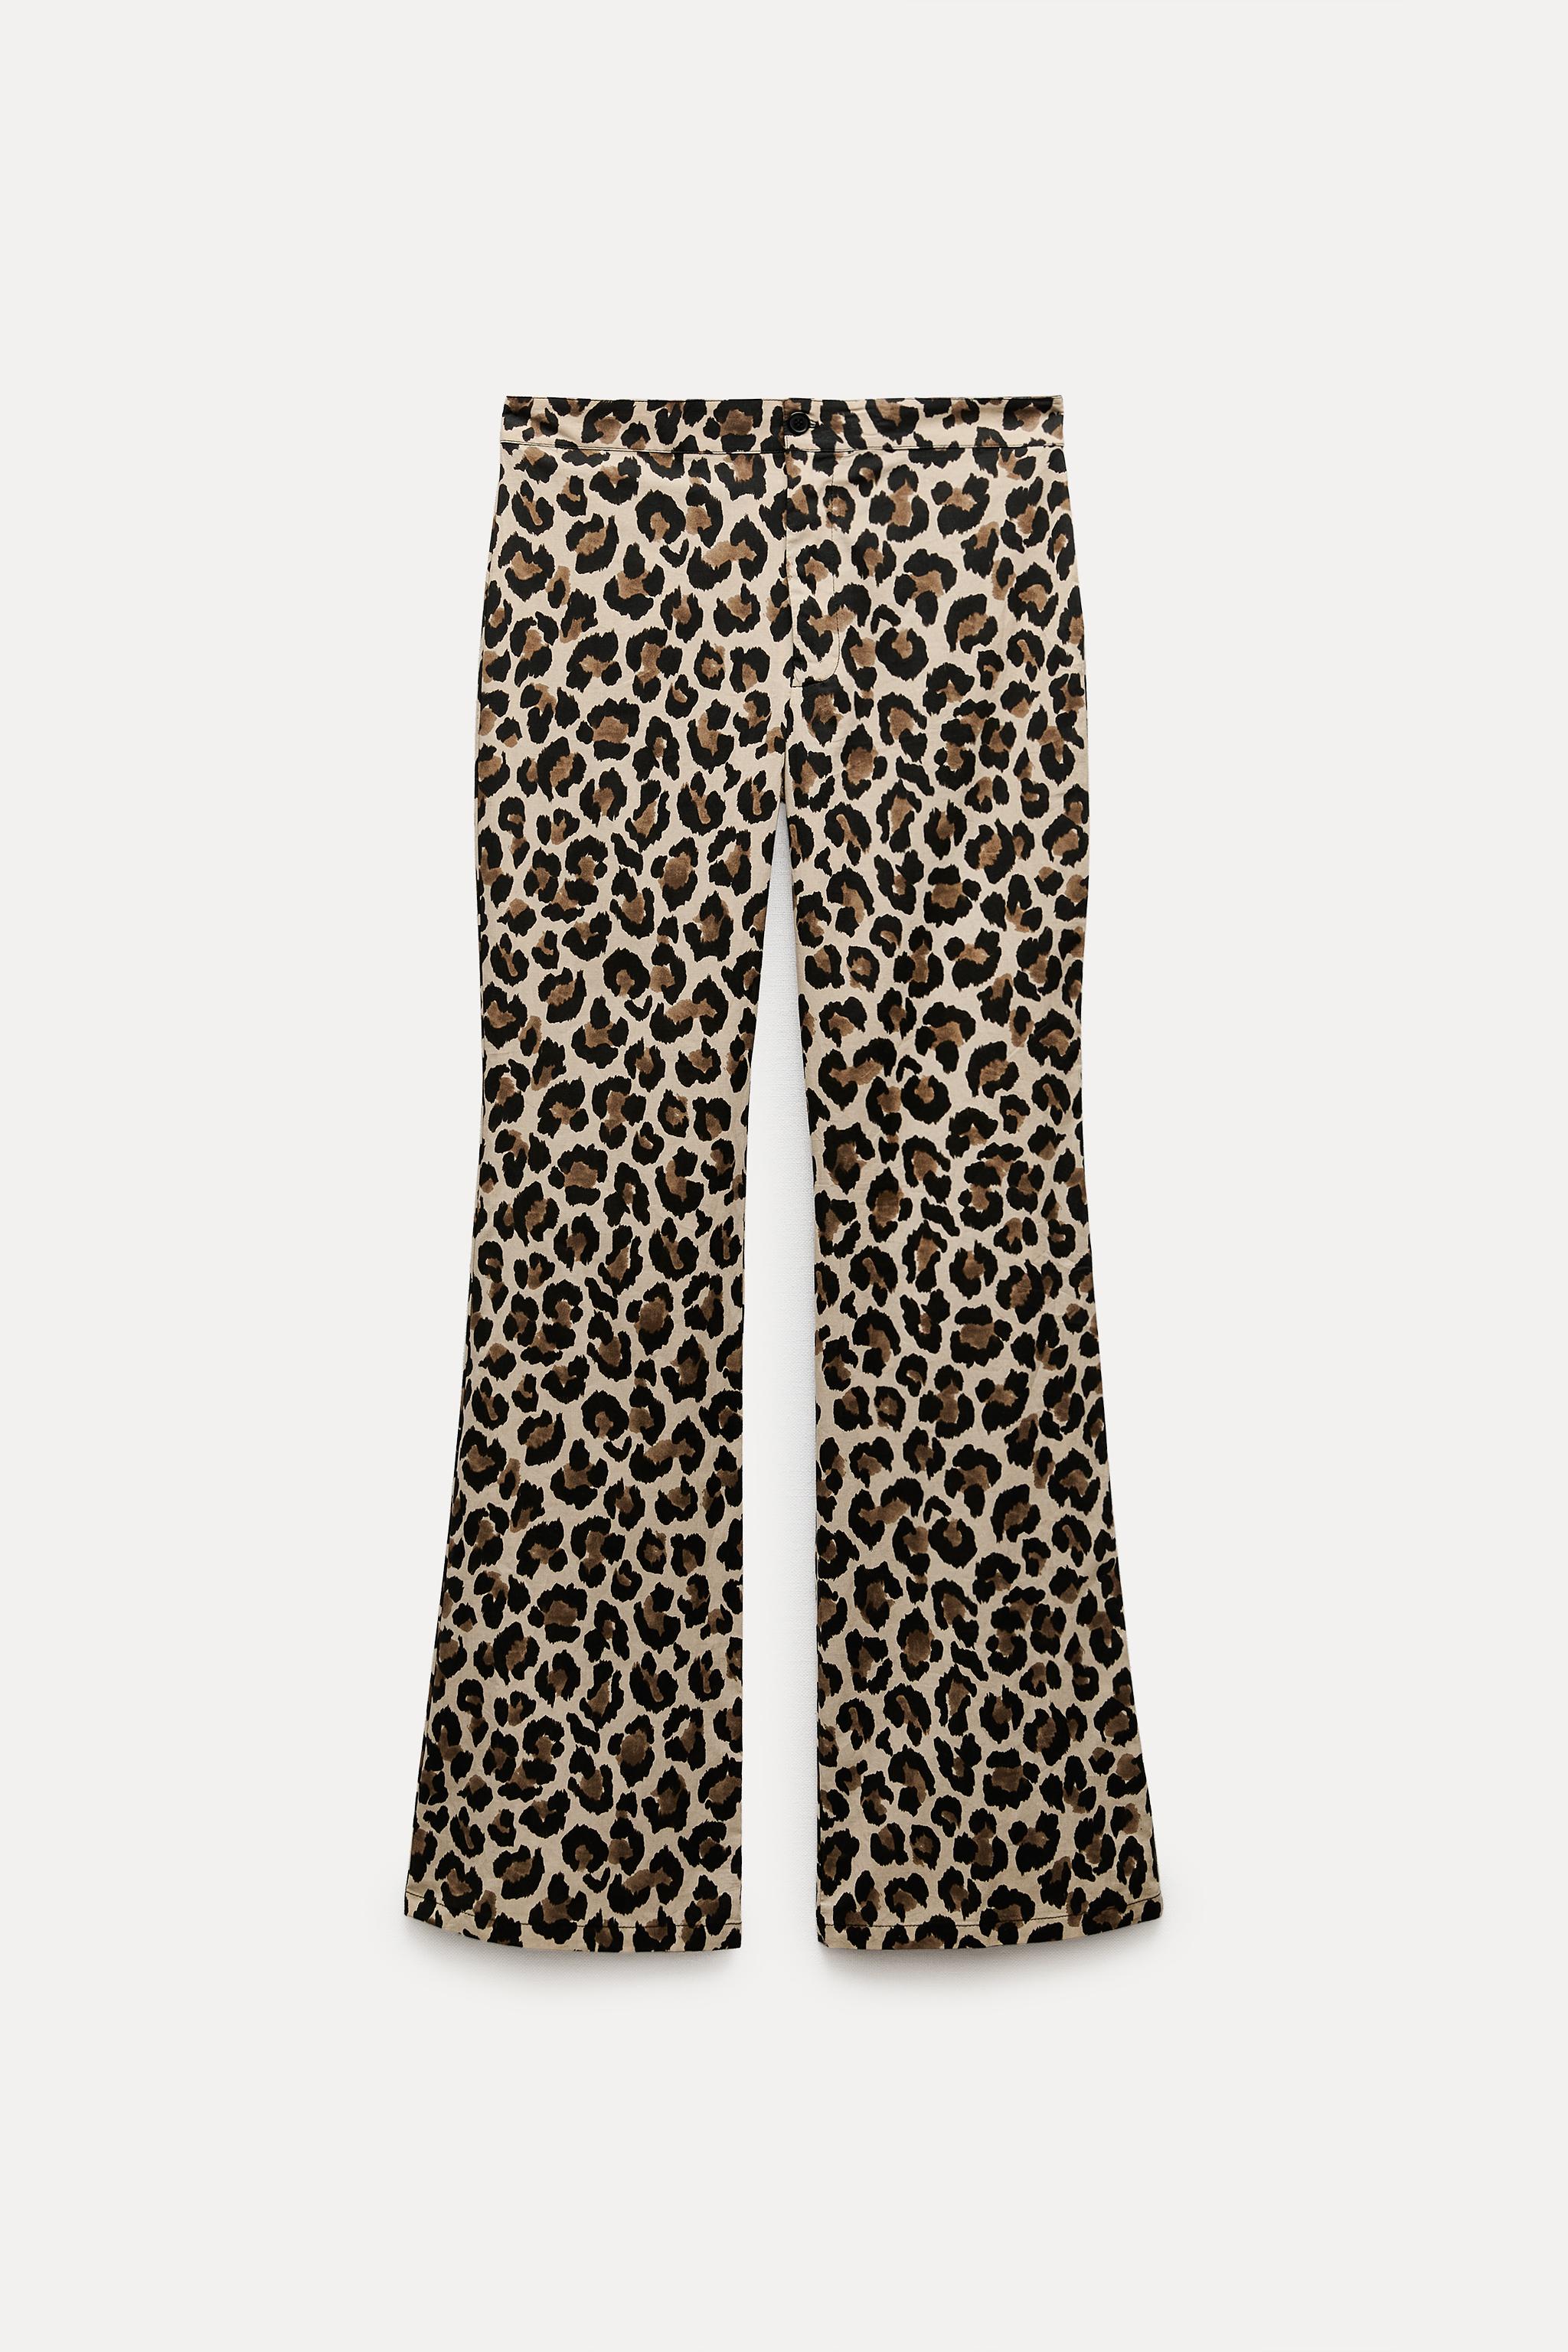 Zara Animal Print Jeans  Animal print jeans, Leopard print jeans